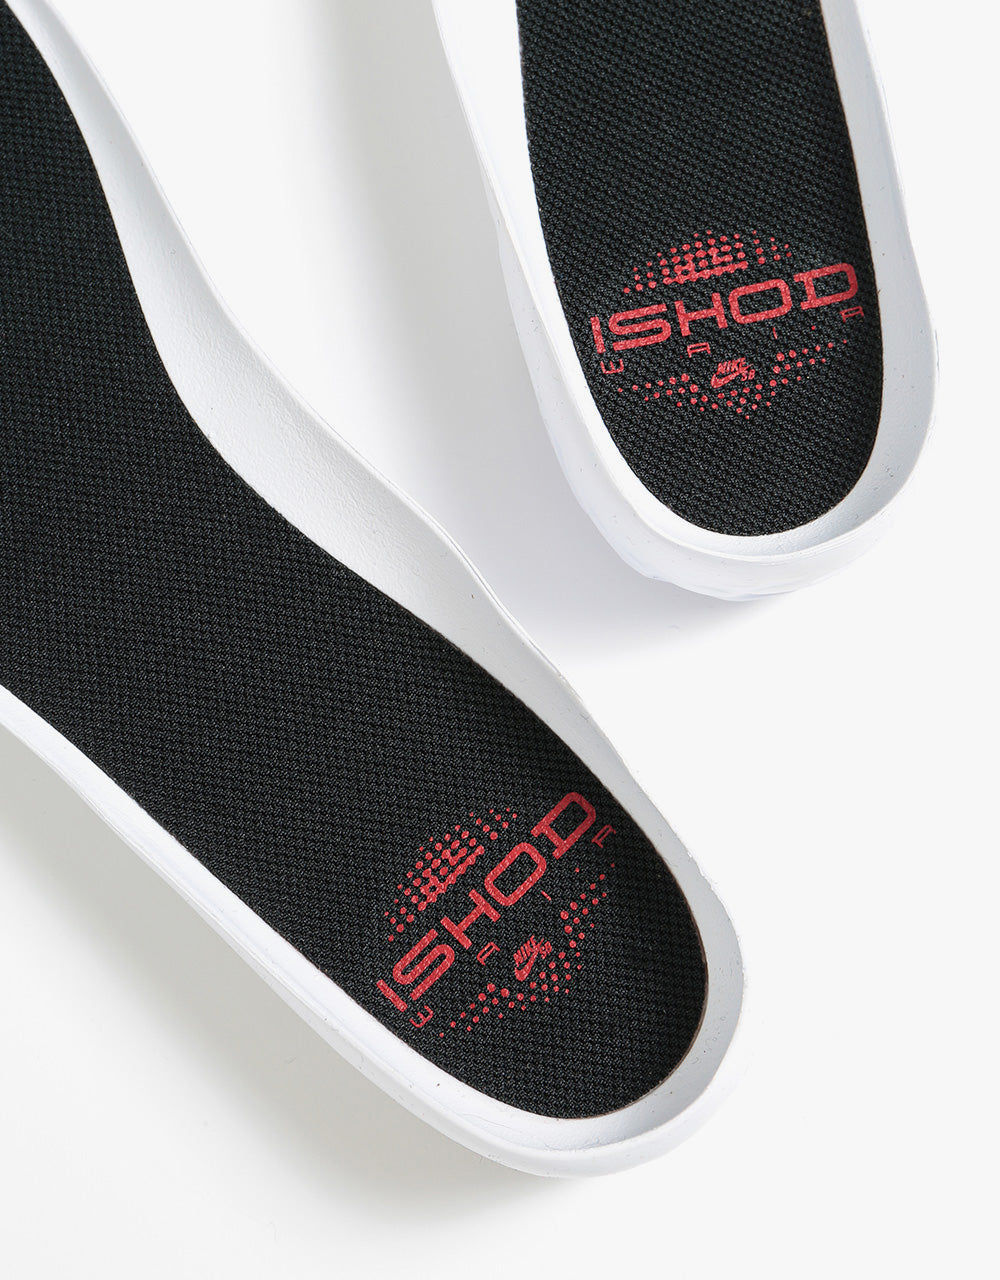 Nike SB Ishod Skate Shoes - Light Olive/Black-Light Olive